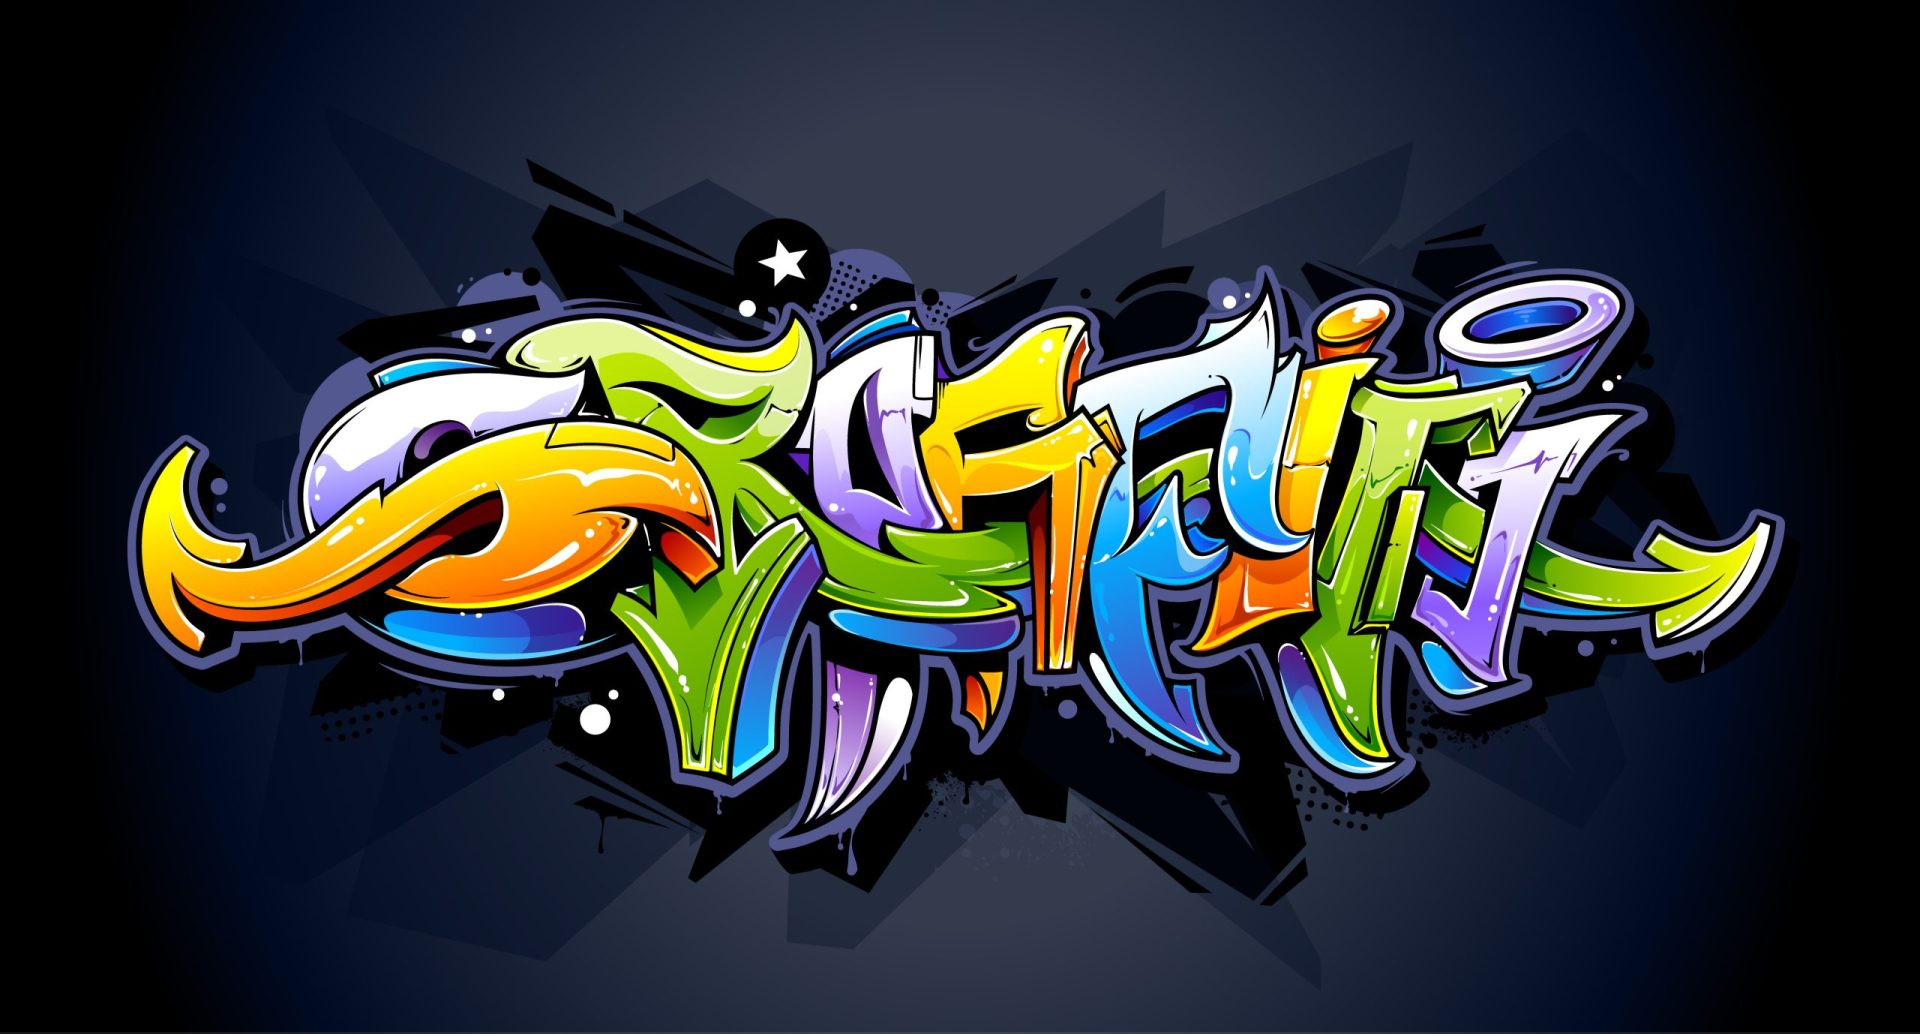 graffiti logo ideas 2